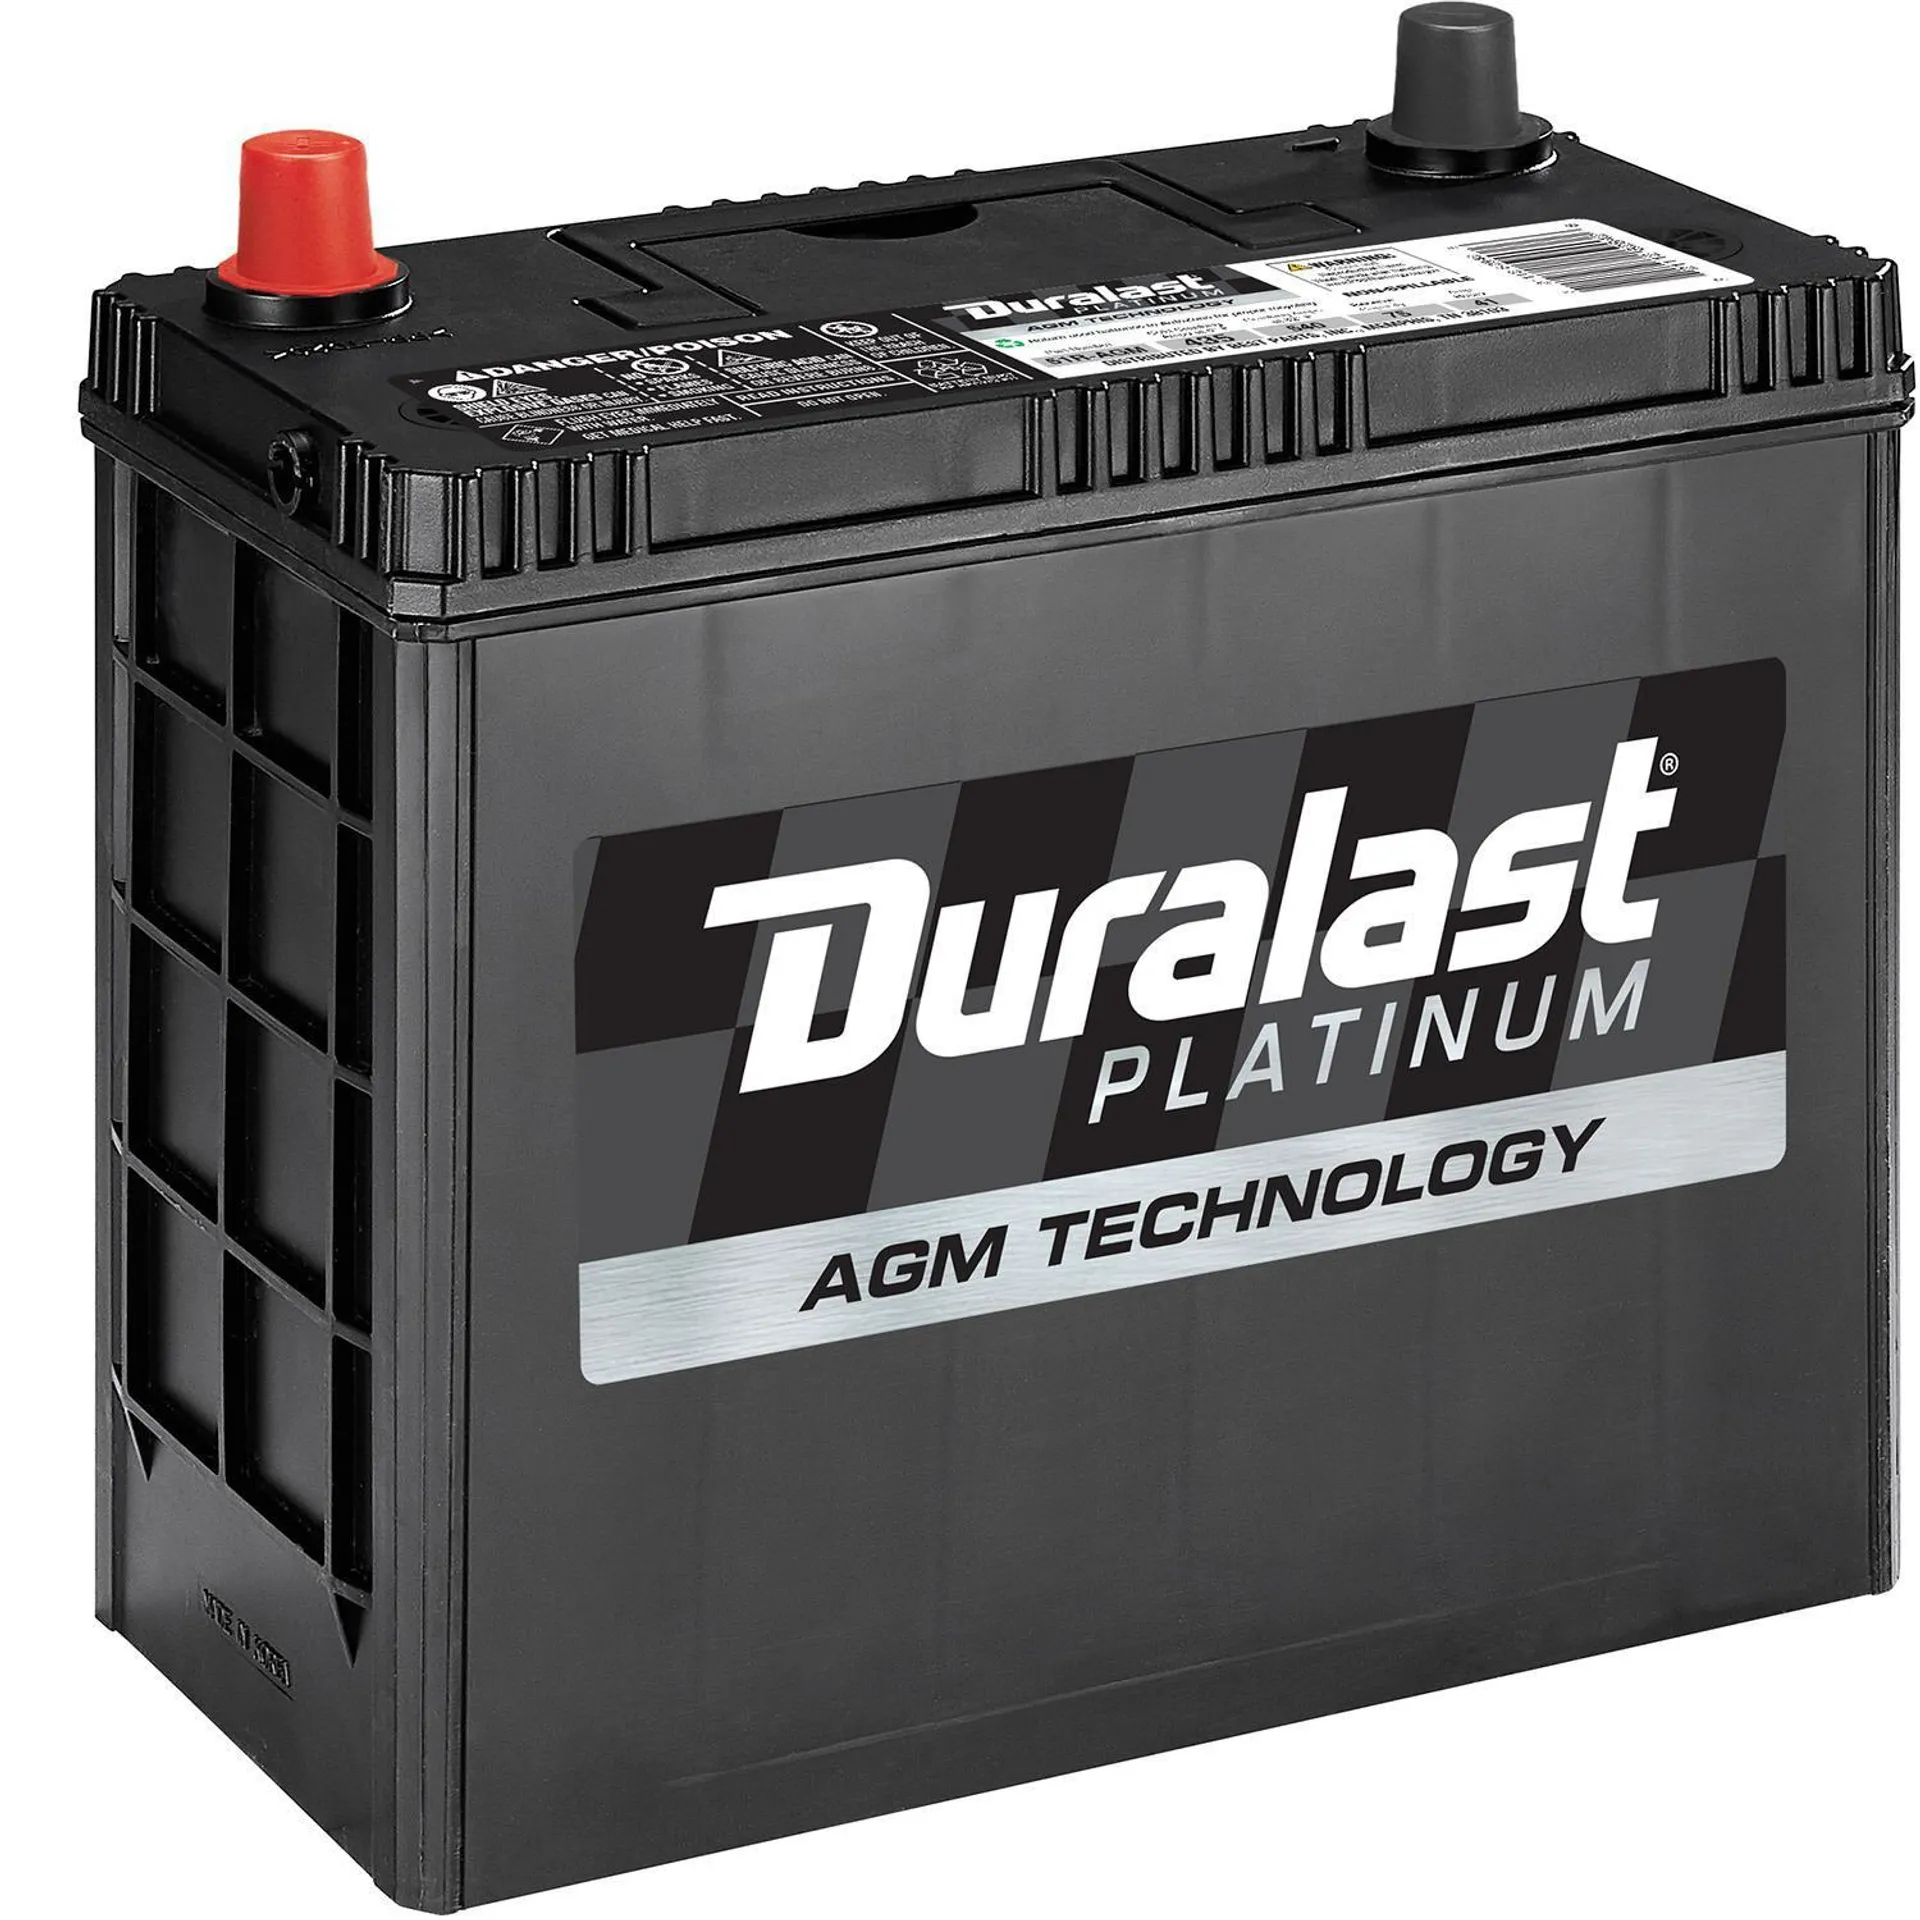 Duralast Platinum AGM Battery 51R-AGM Group Size 51R 435 CCA